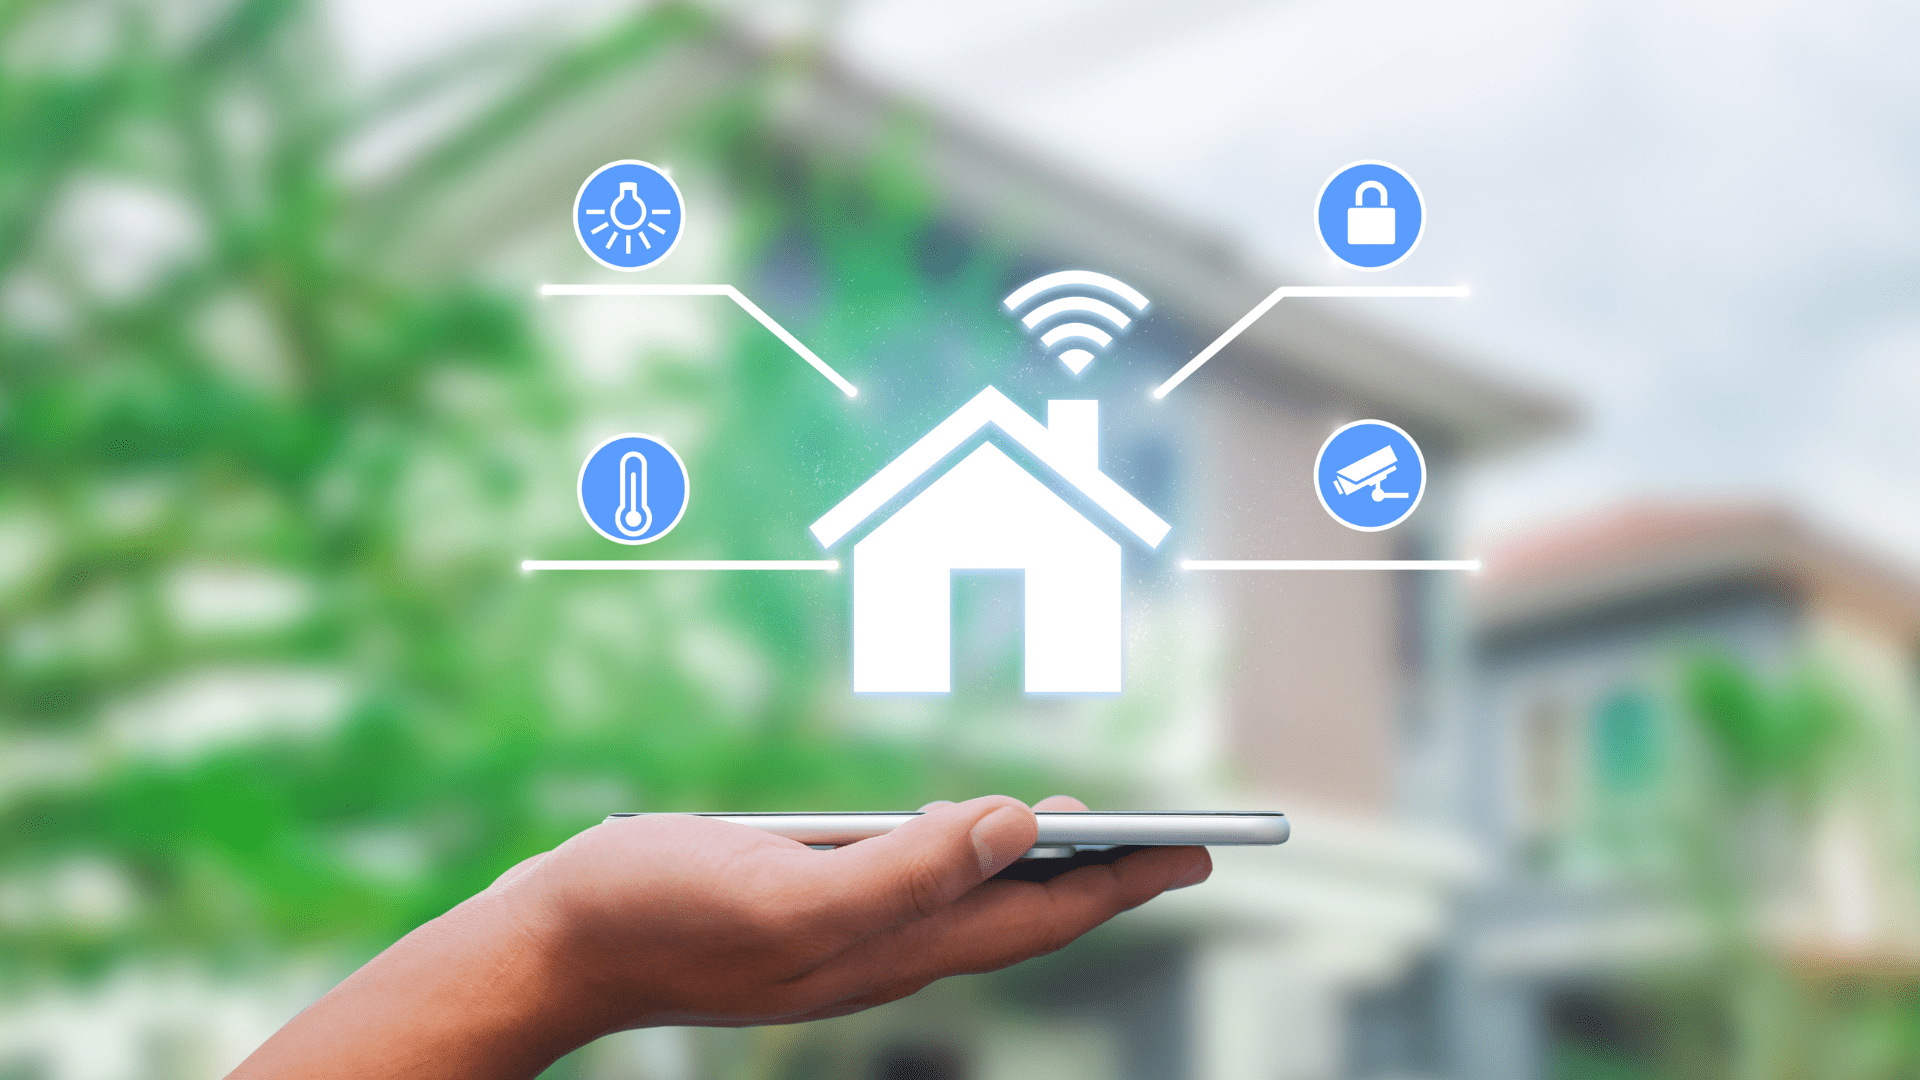 Smart home technology